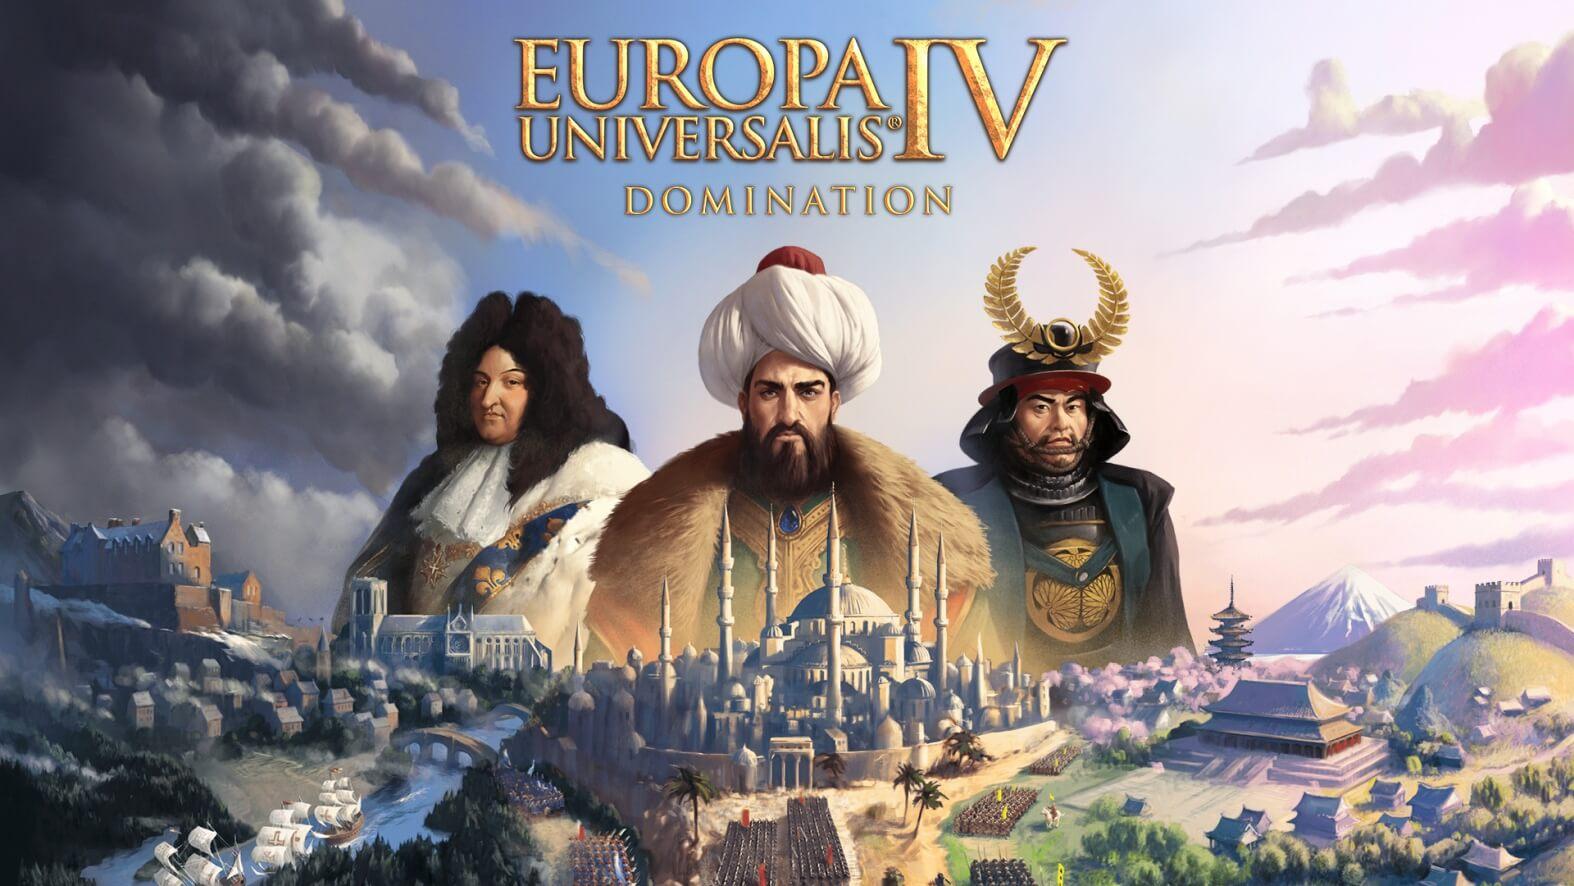 europa universalis iv domination key art